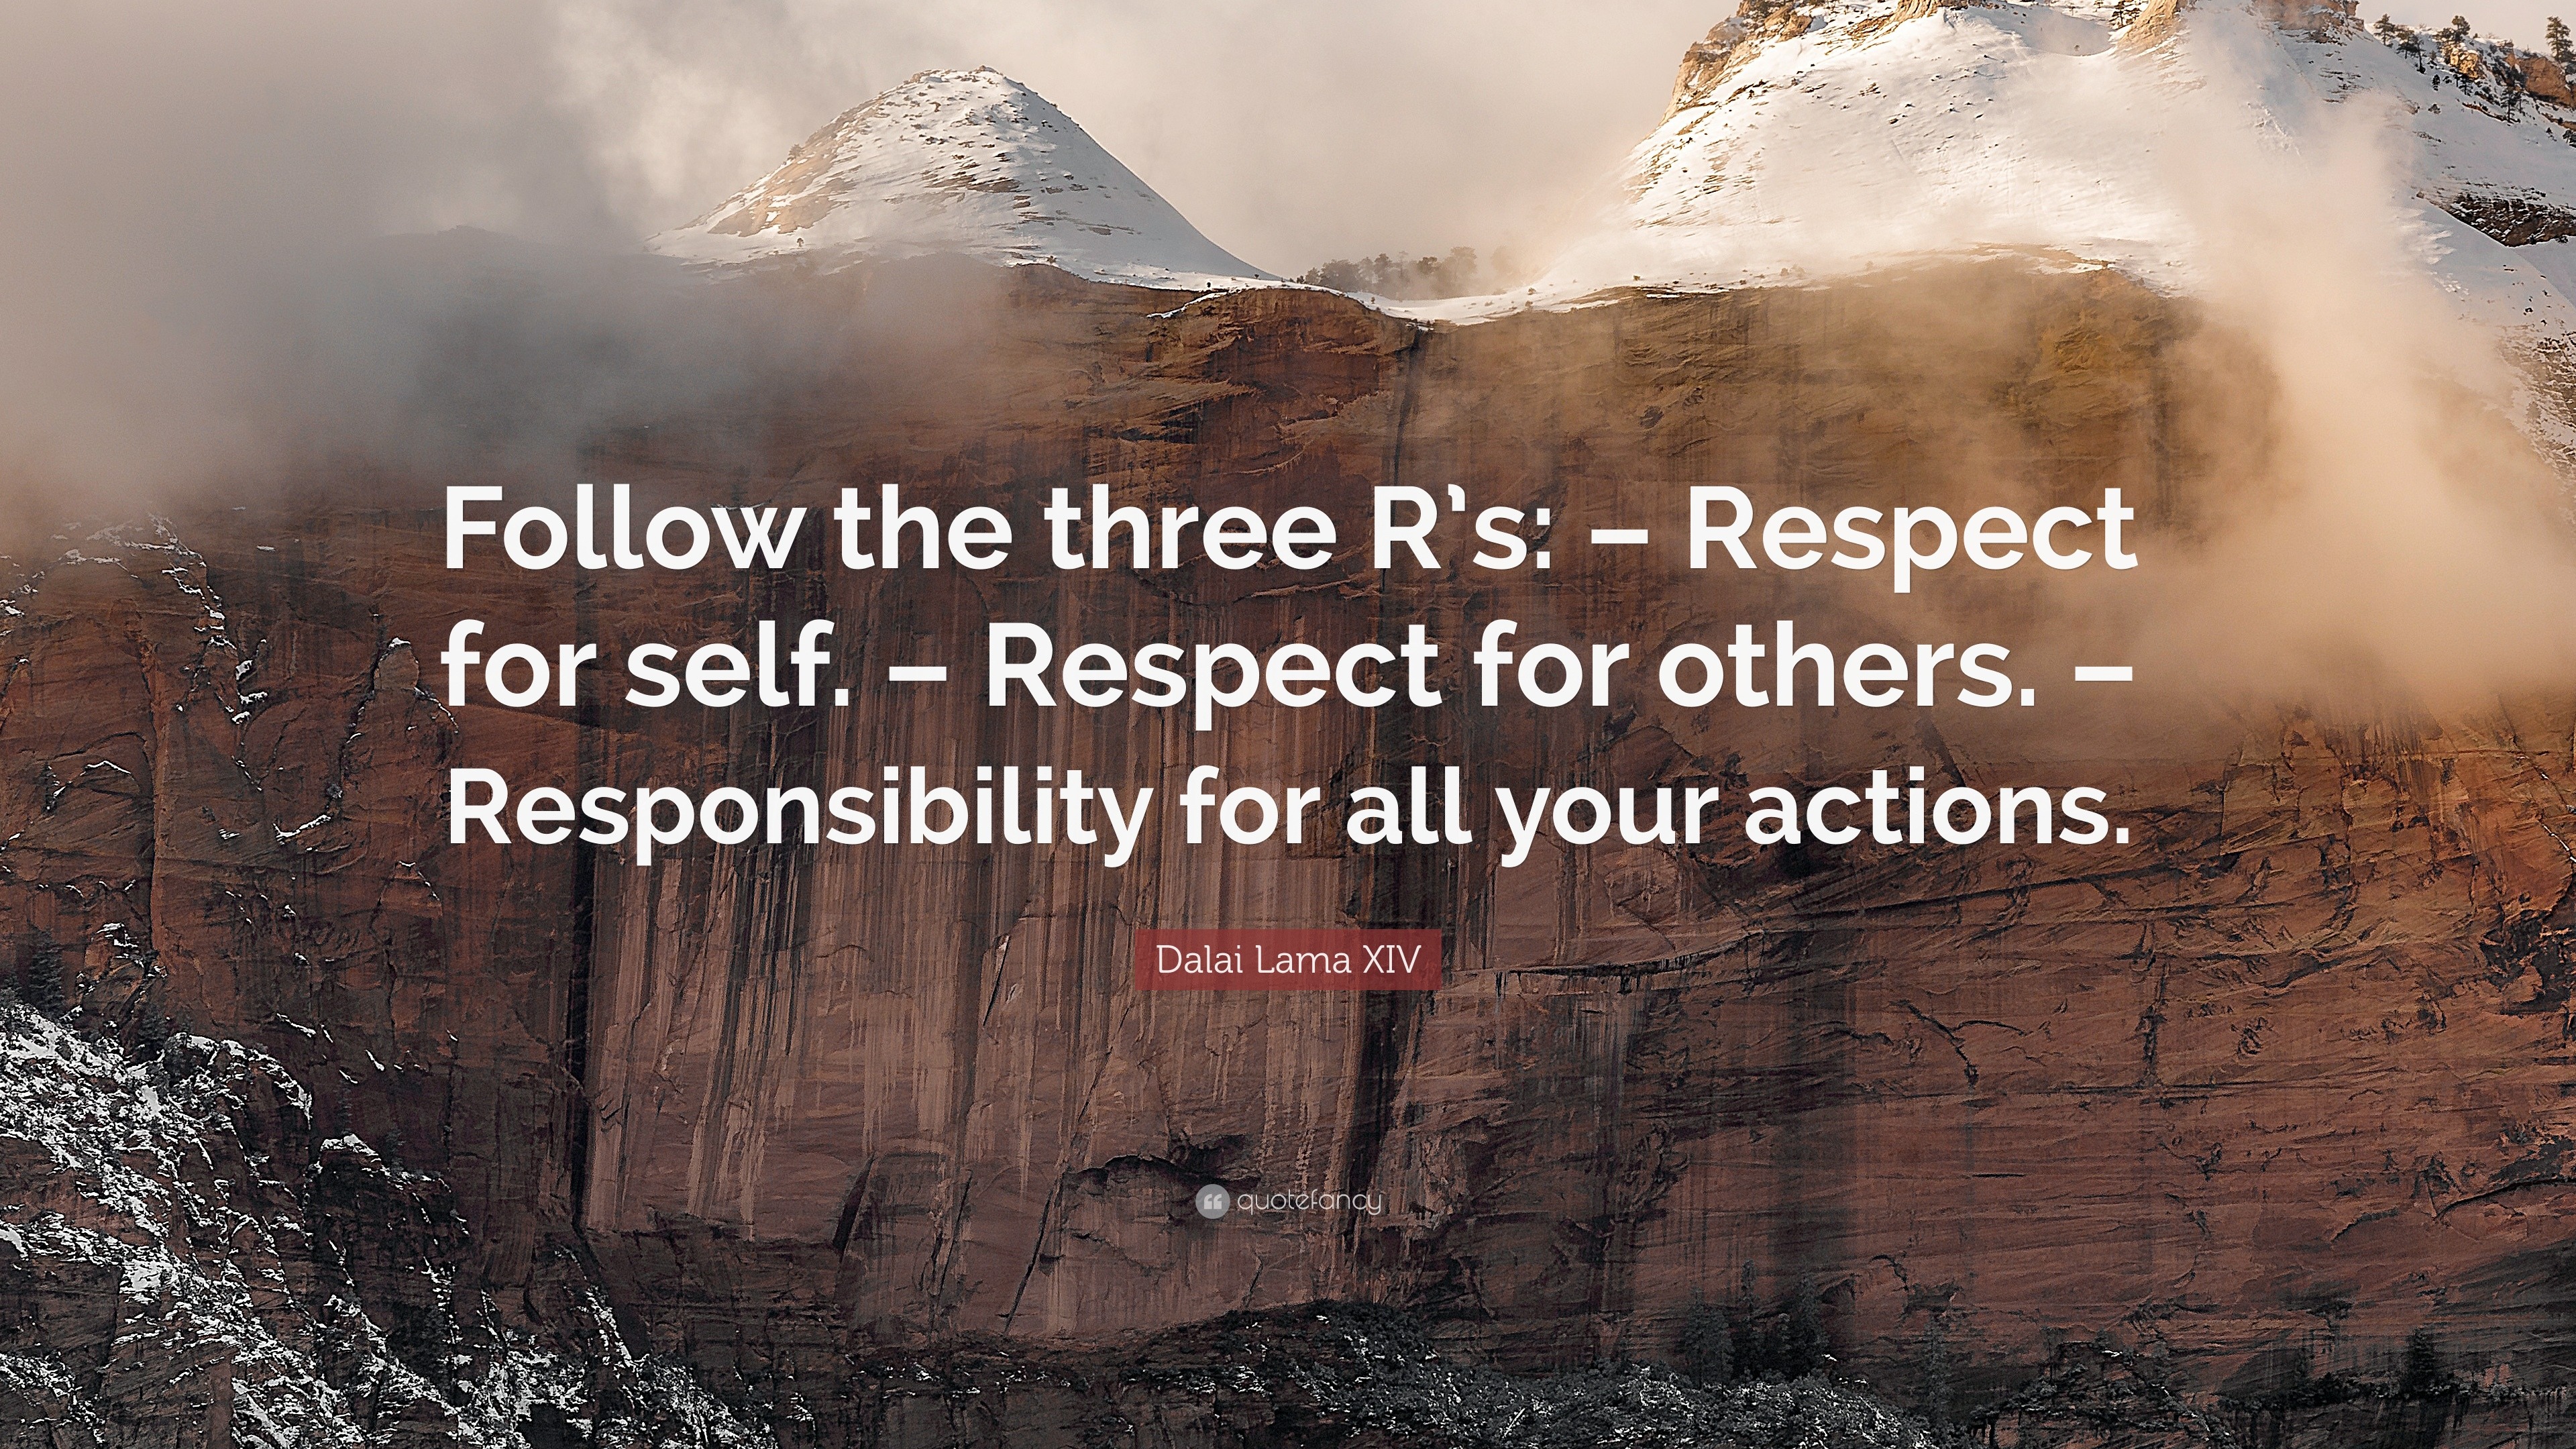 Dalai Lama XIV Quote “Follow the three R’s Respect for